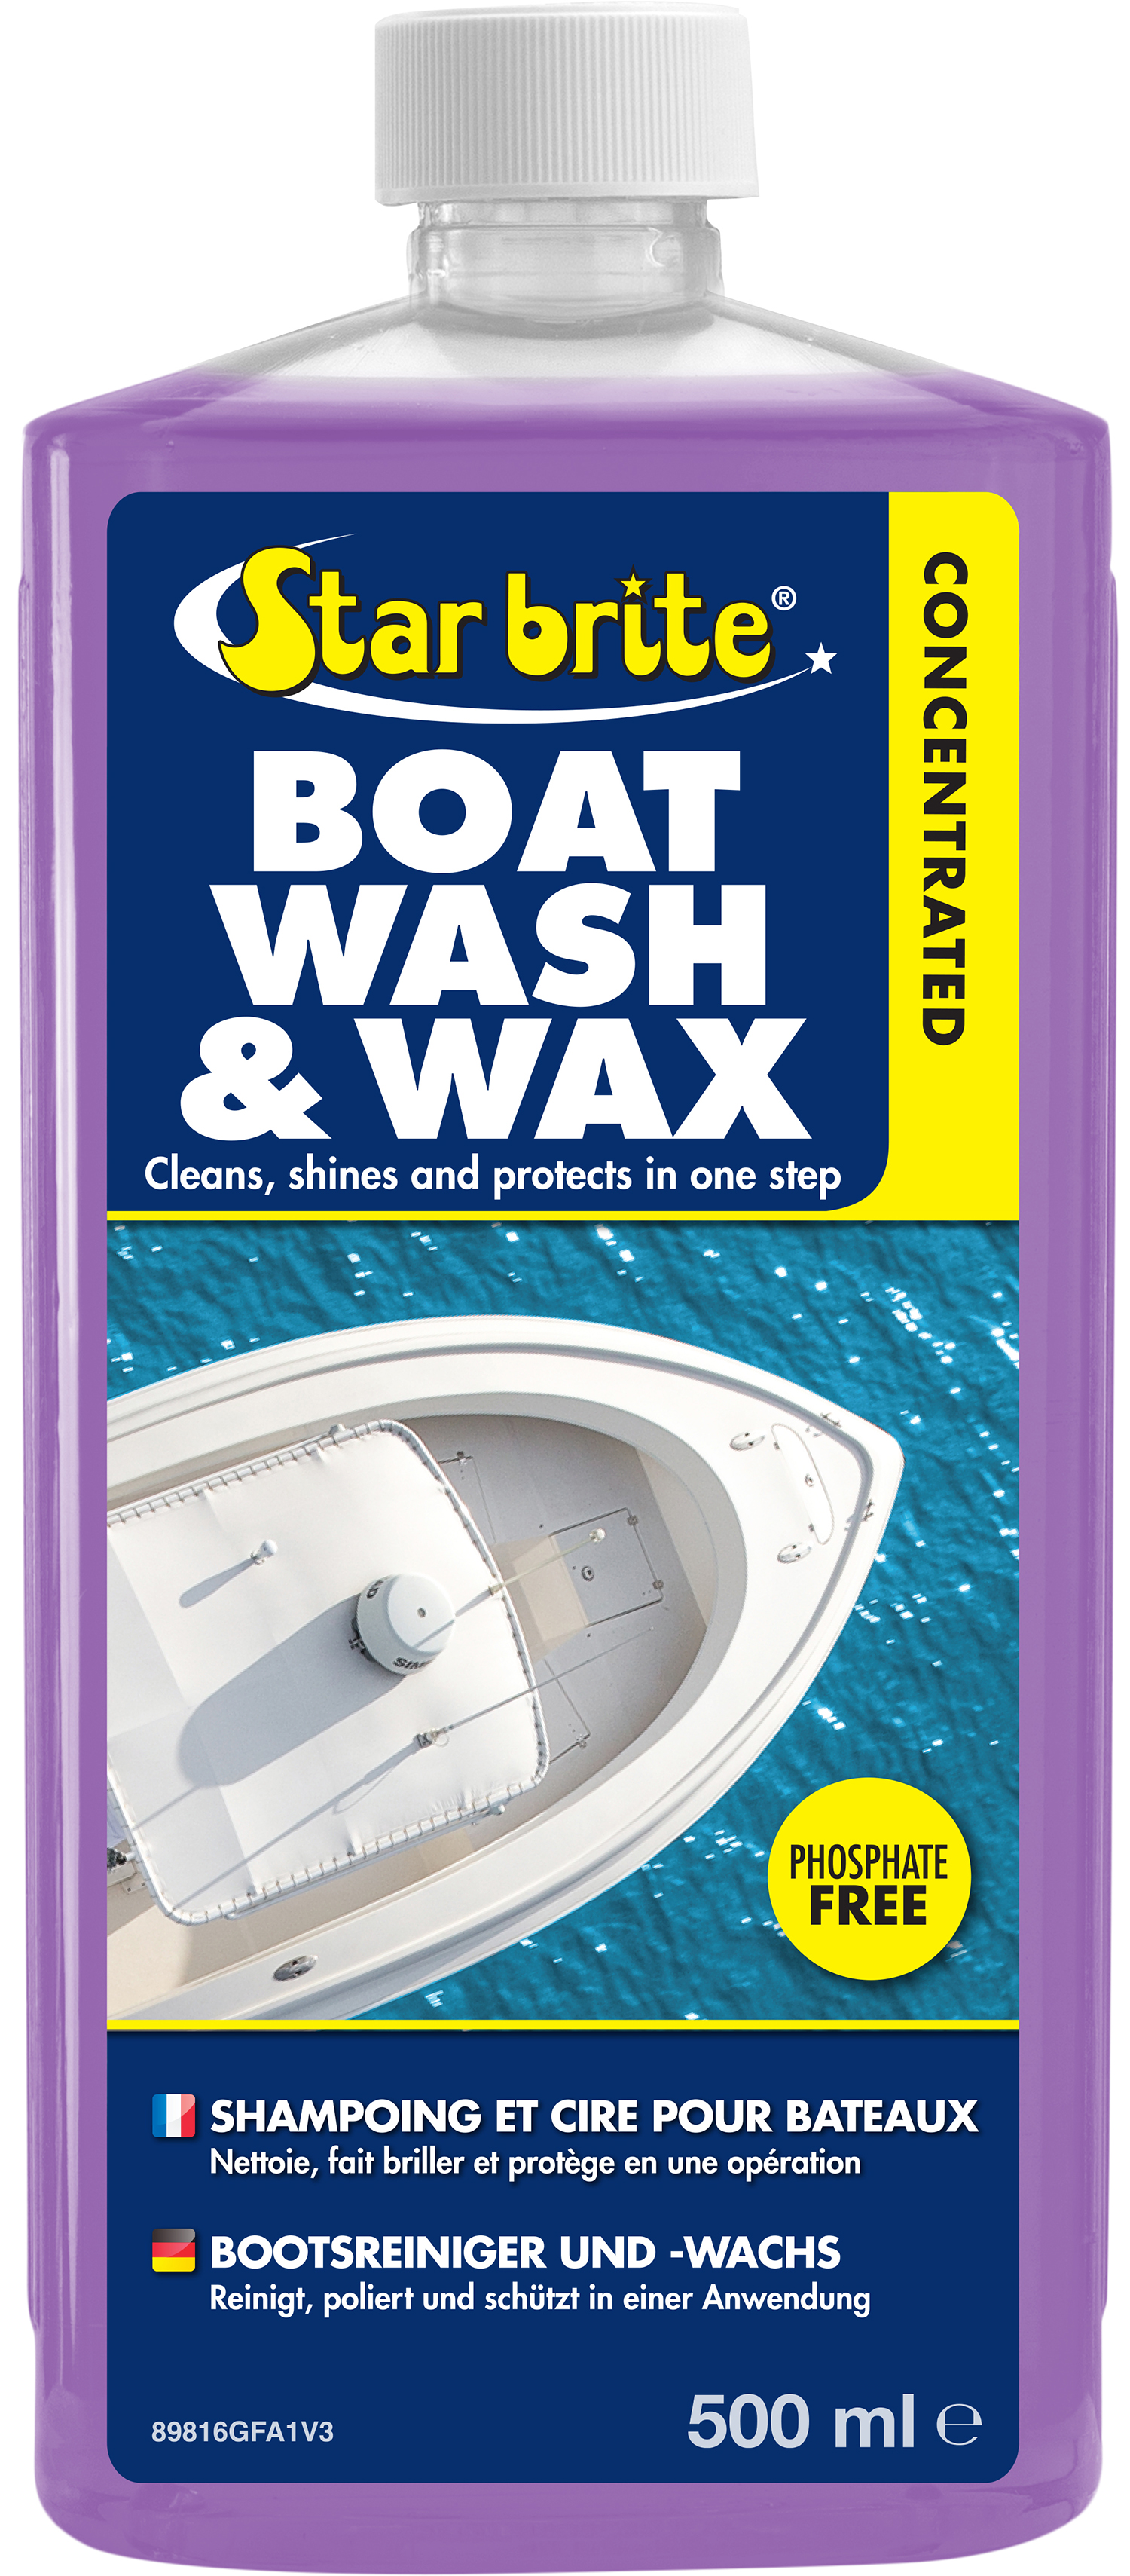 Star brite Boat Wash & Wax